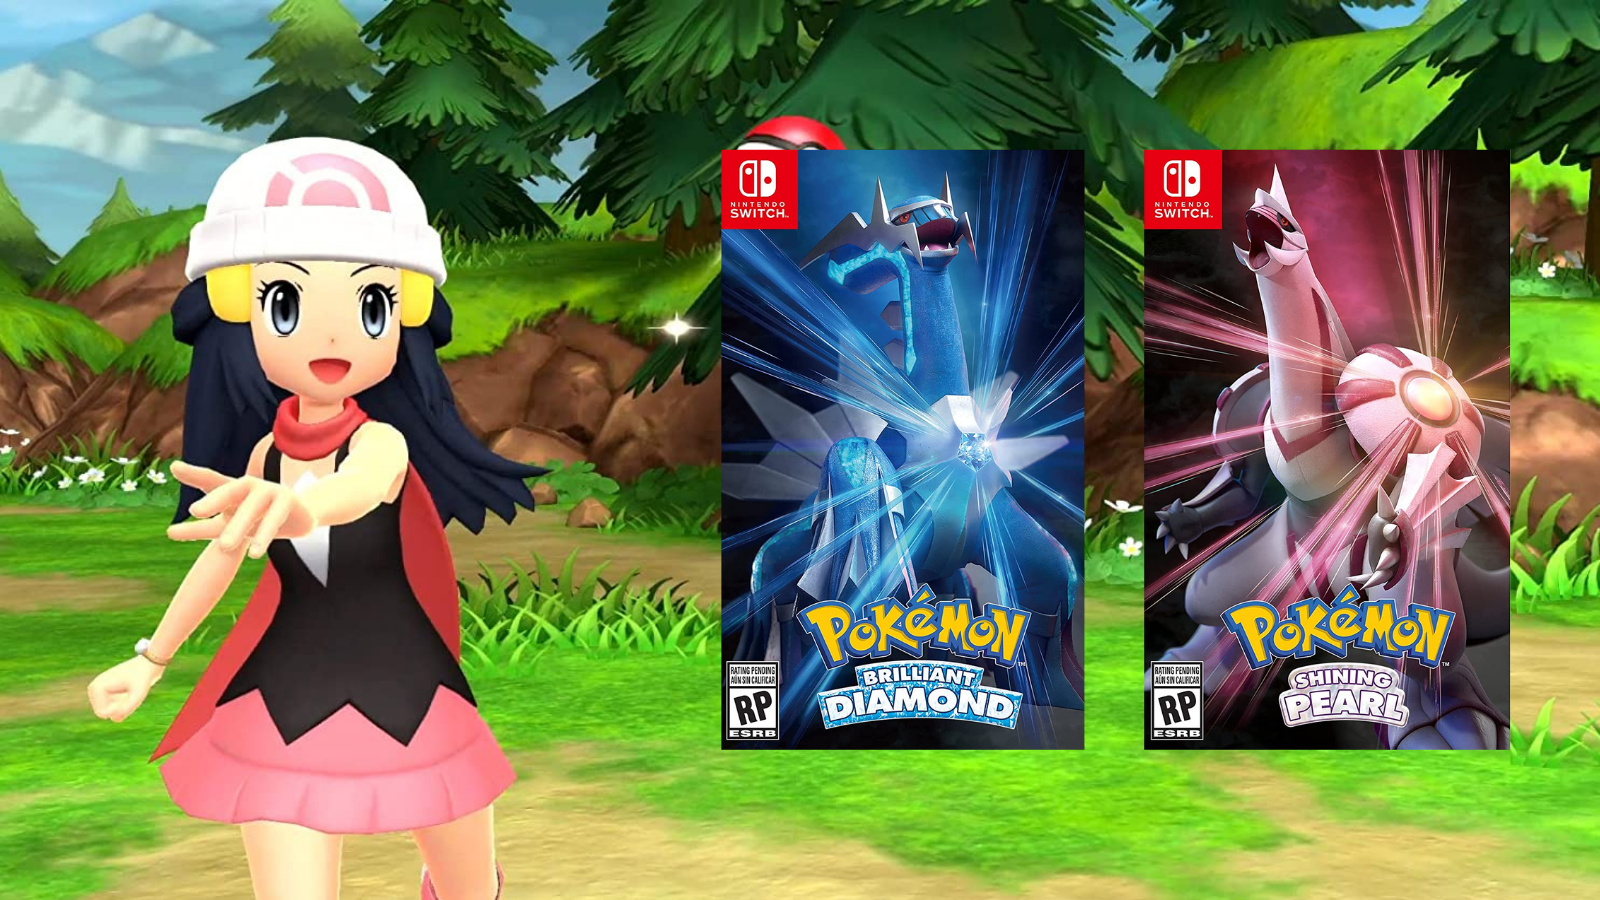 Pokémon™ Brilliant Diamond for Nintendo Switch - Nintendo Official